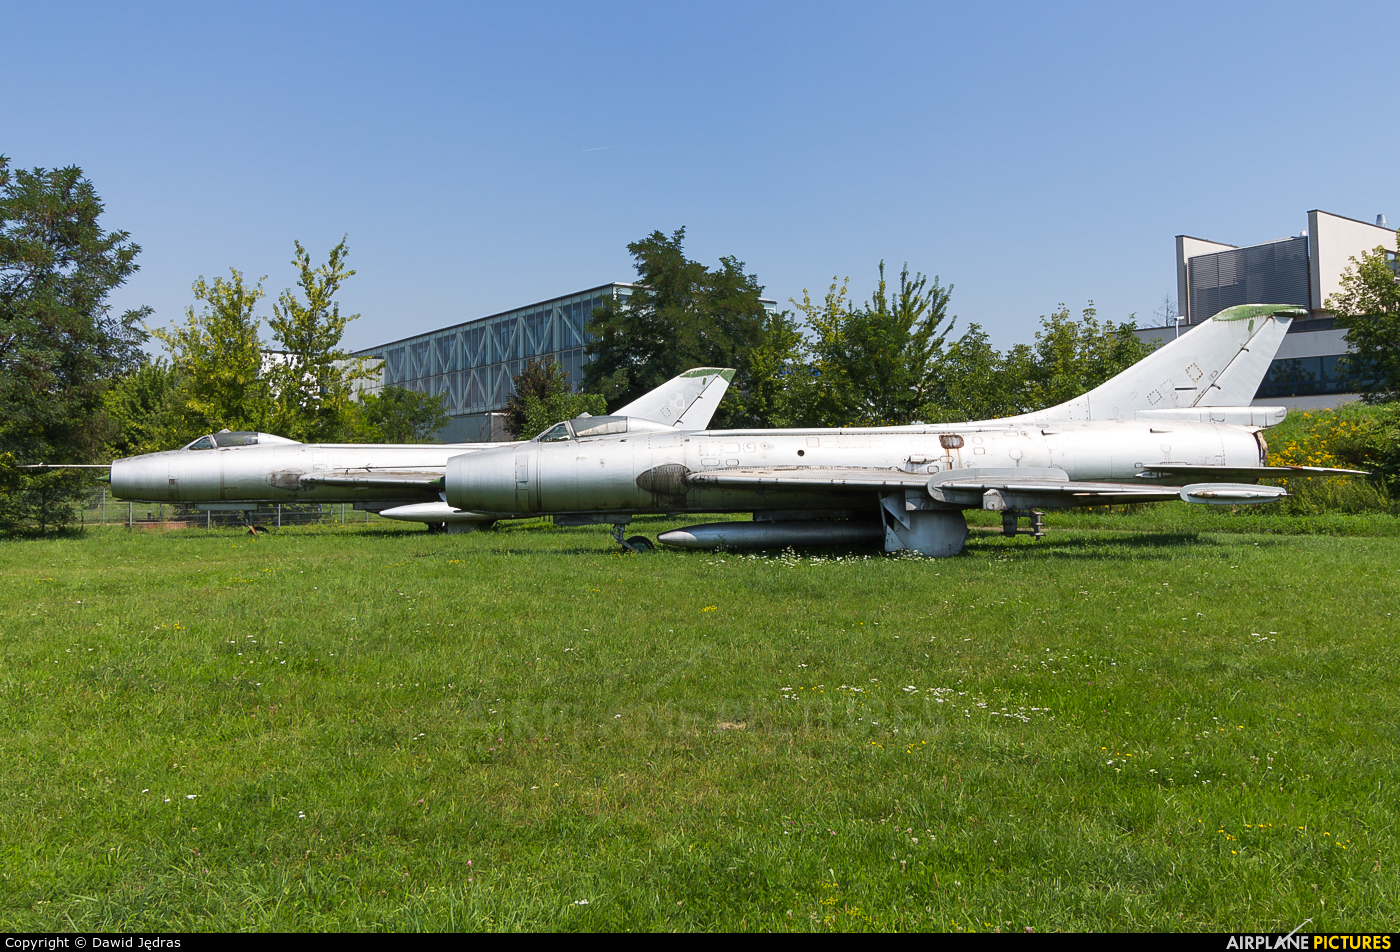 Poland - Air Force 807 aircraft at Kraków, Rakowice Czyżyny - Museum of Polish Aviation